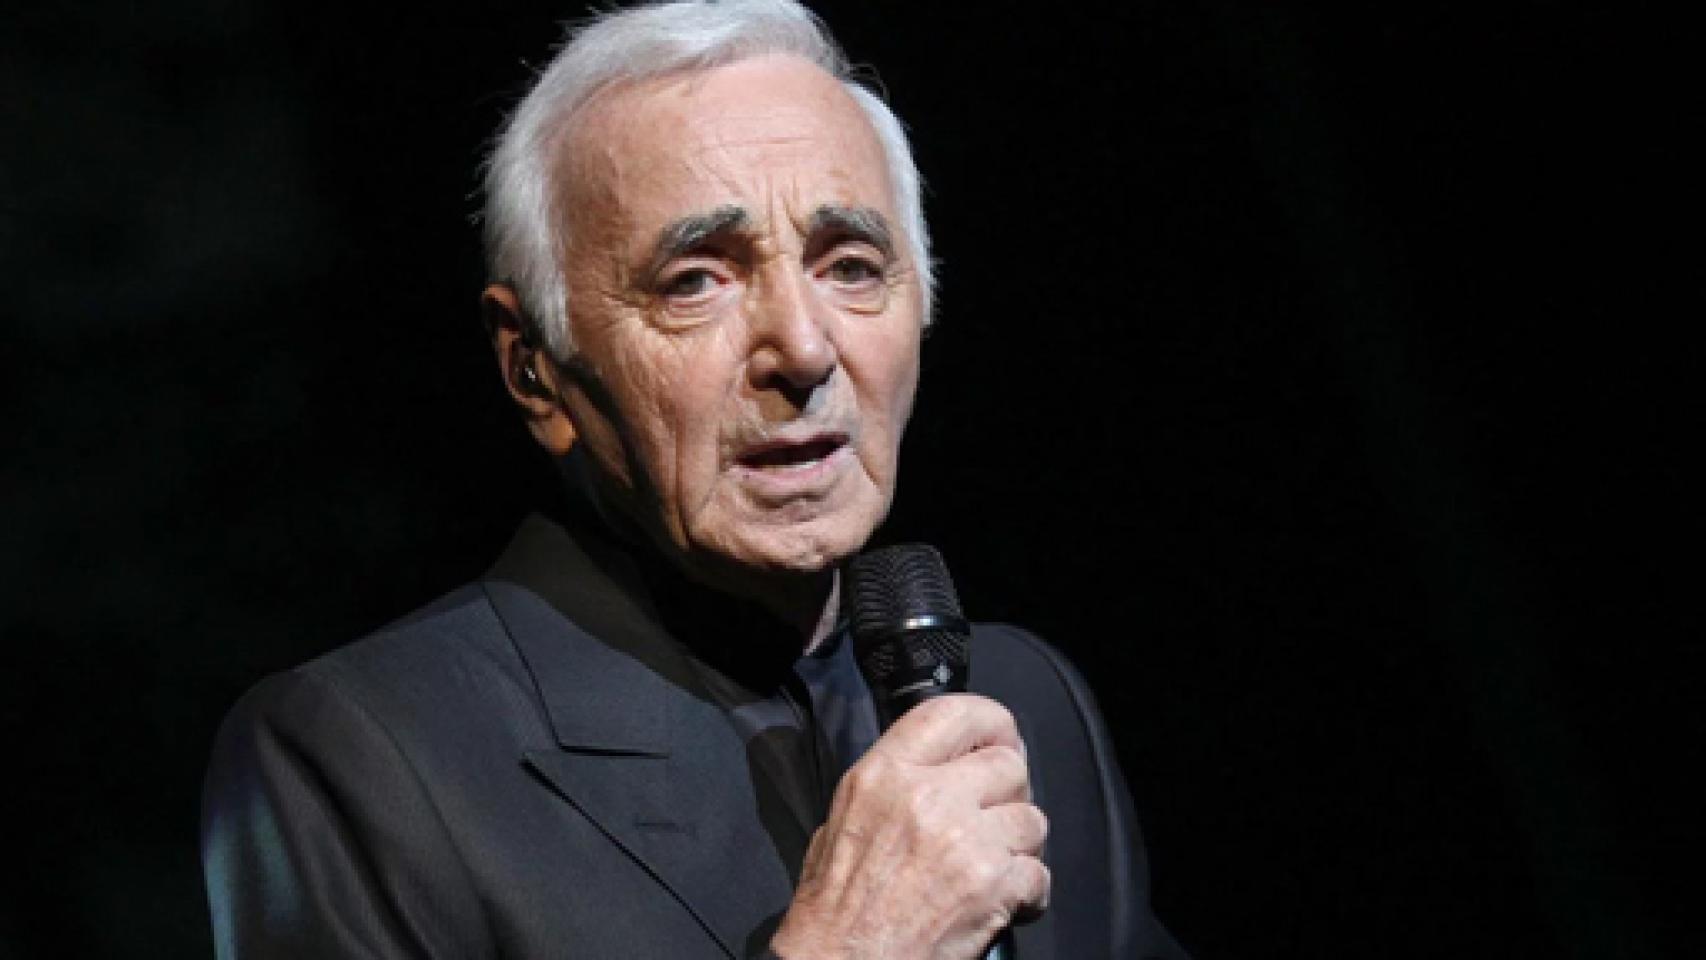 Image: Adiós a Charles Aznavour, el último bohemio